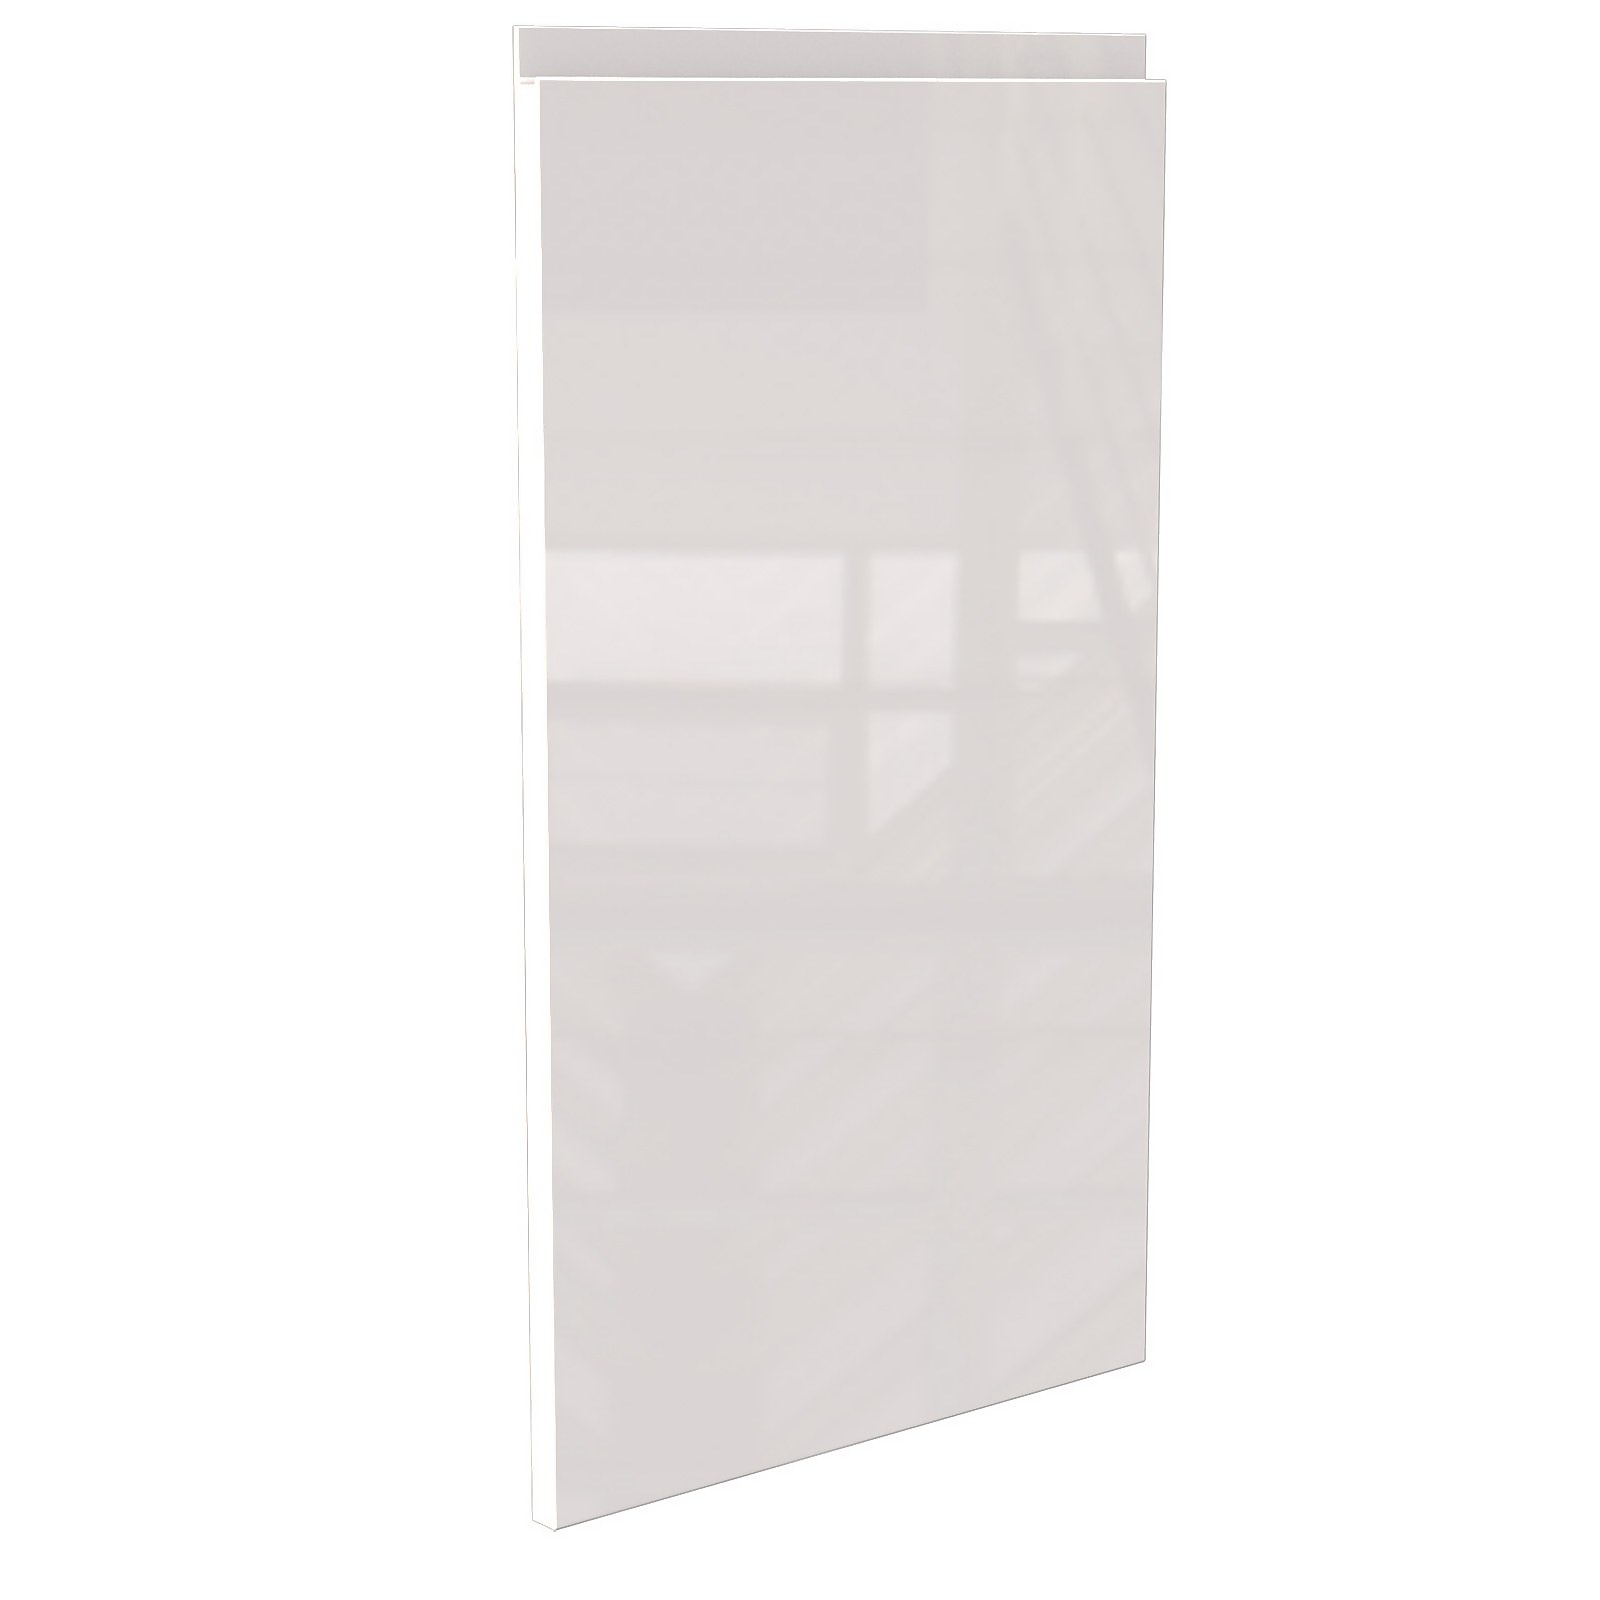 Handleless Kitchen Cabinet Door (W)397mm - Gloss White